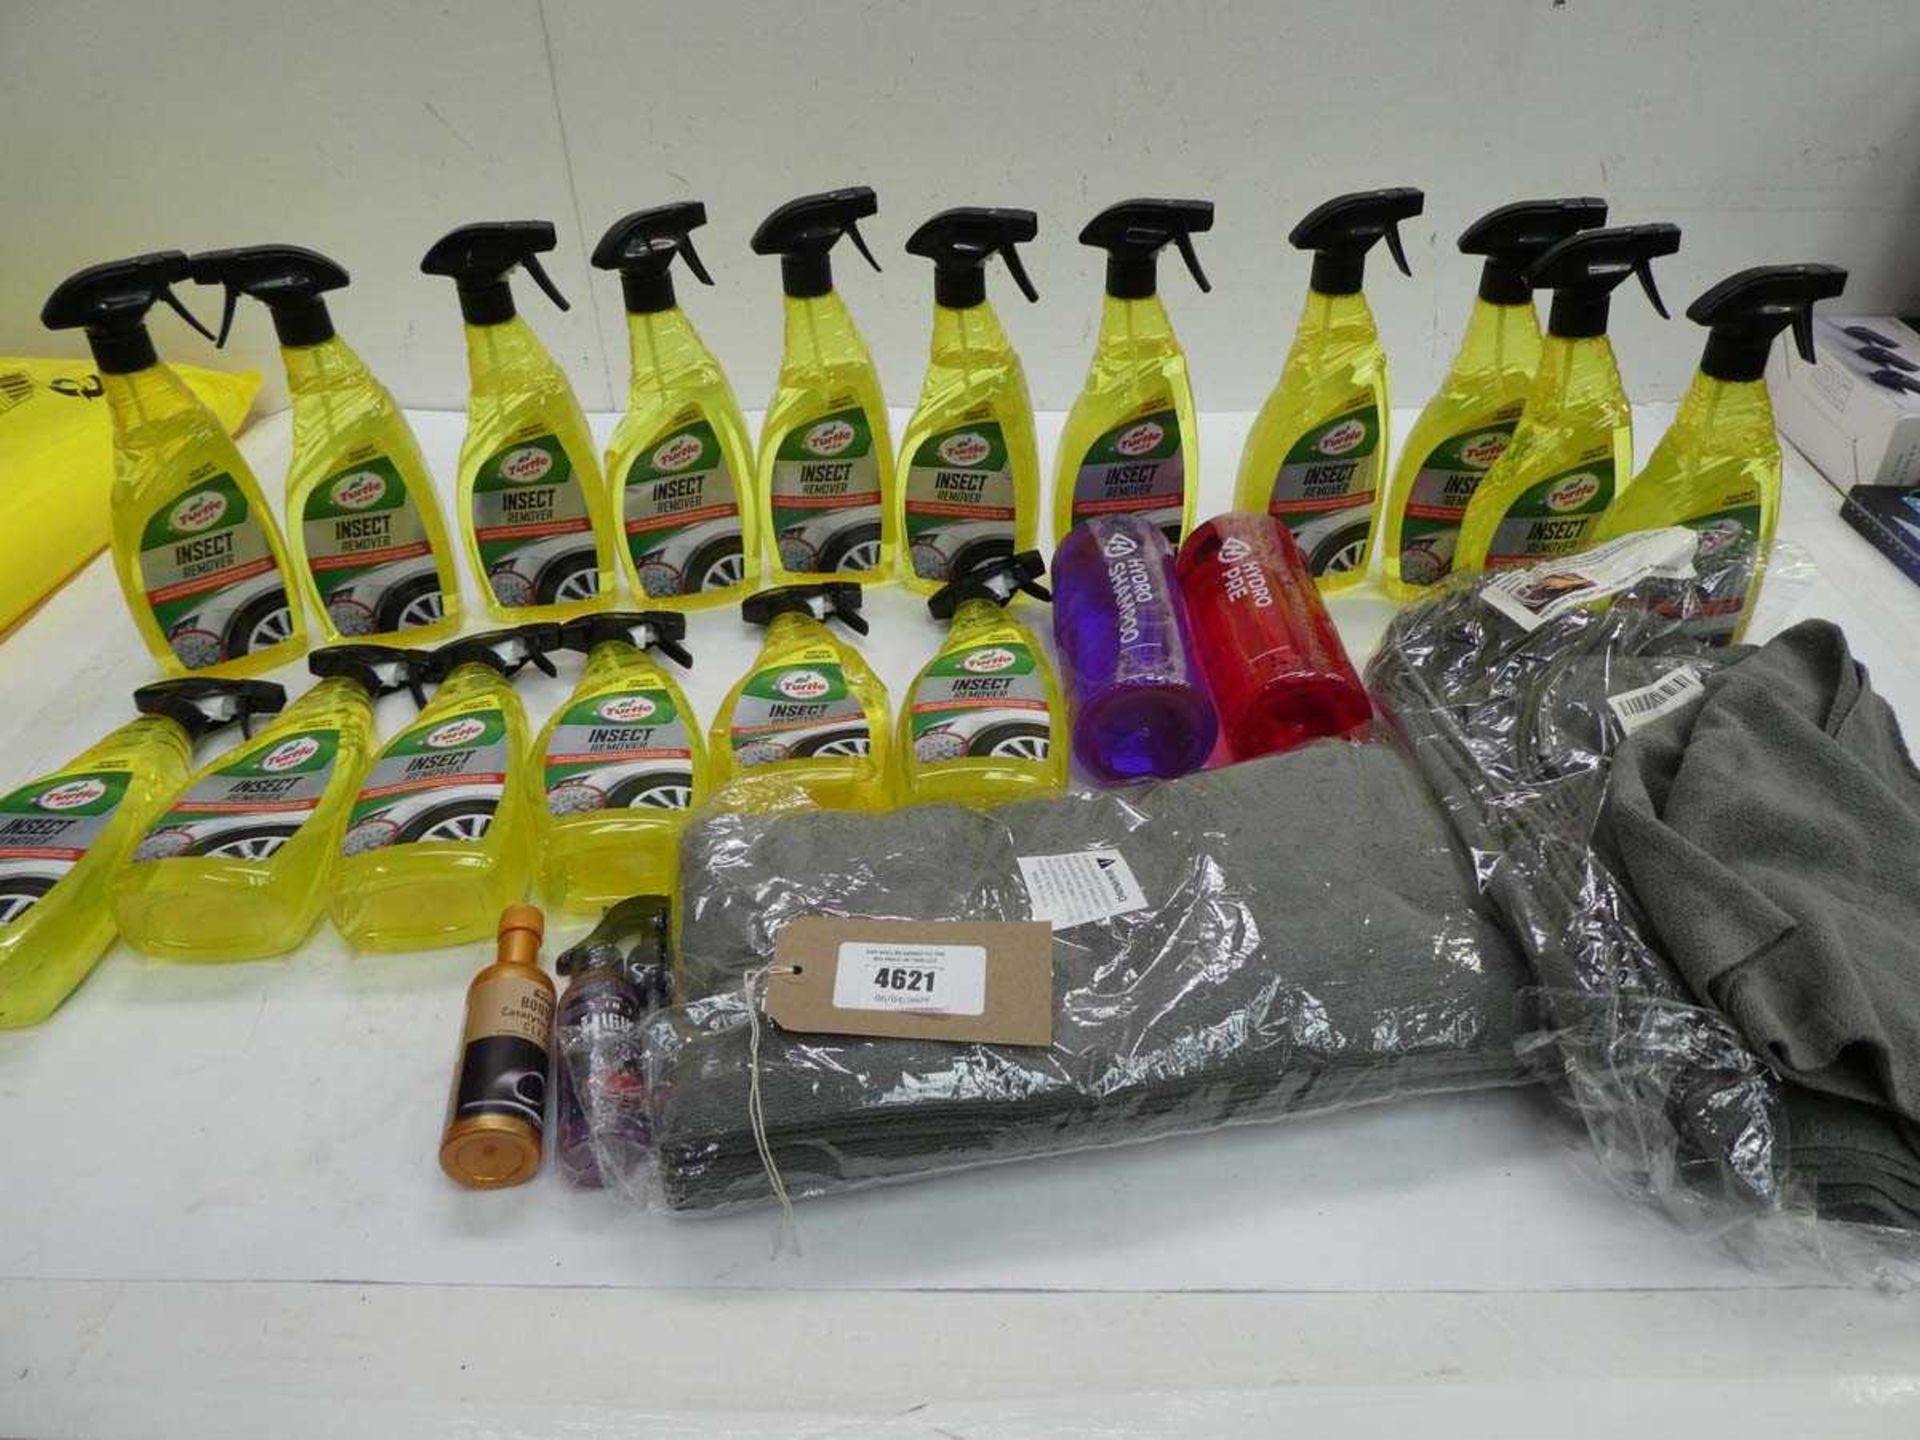 +VAT Turtle wax insect remover, Hydro Pro & Shampoo, micro fibre cloths etc